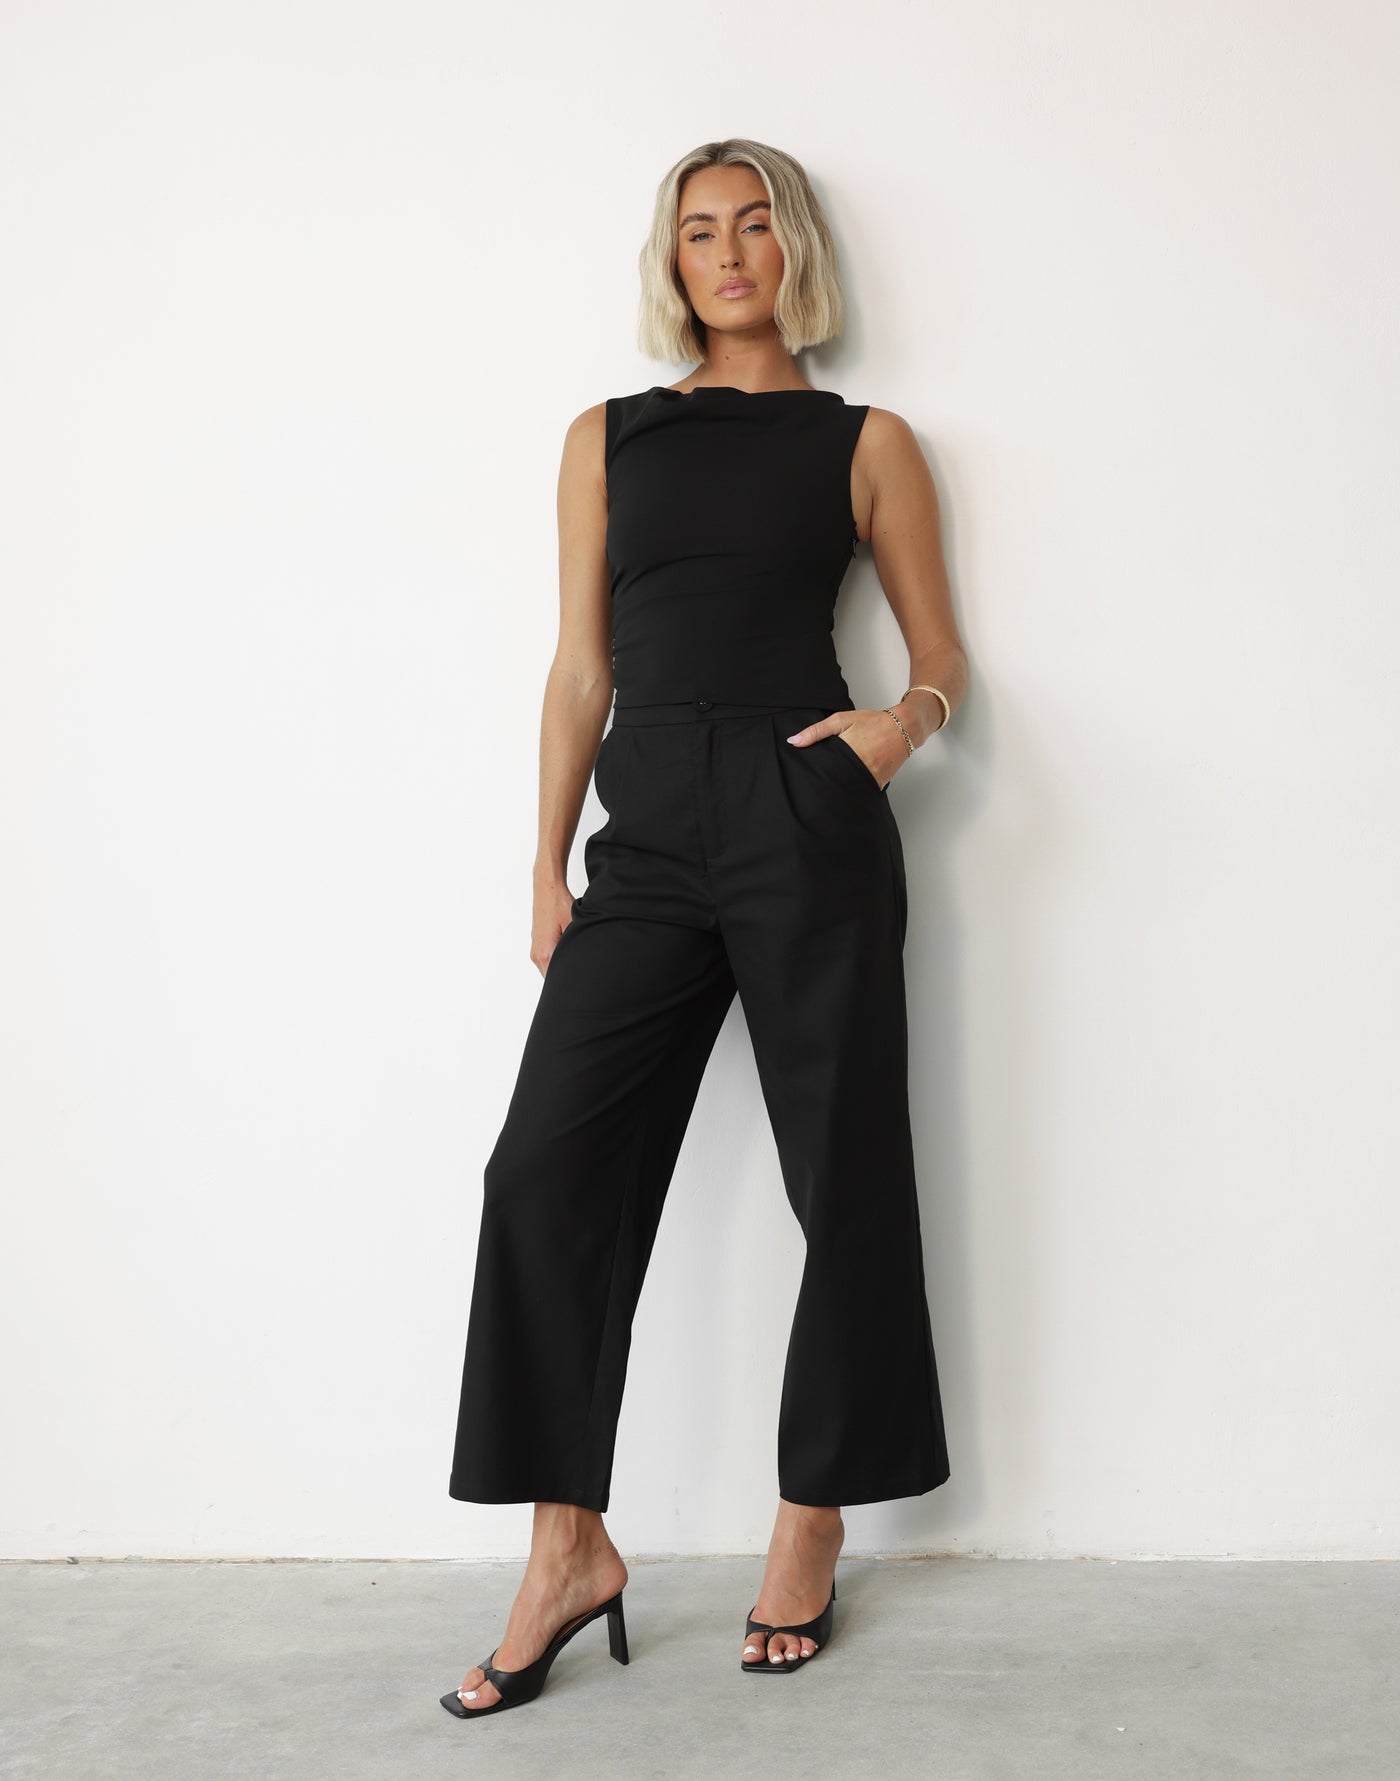 Kristella Pants (Black) - High Waisted Linen Look Lined Pants - Women's Pants - Charcoal Clothing